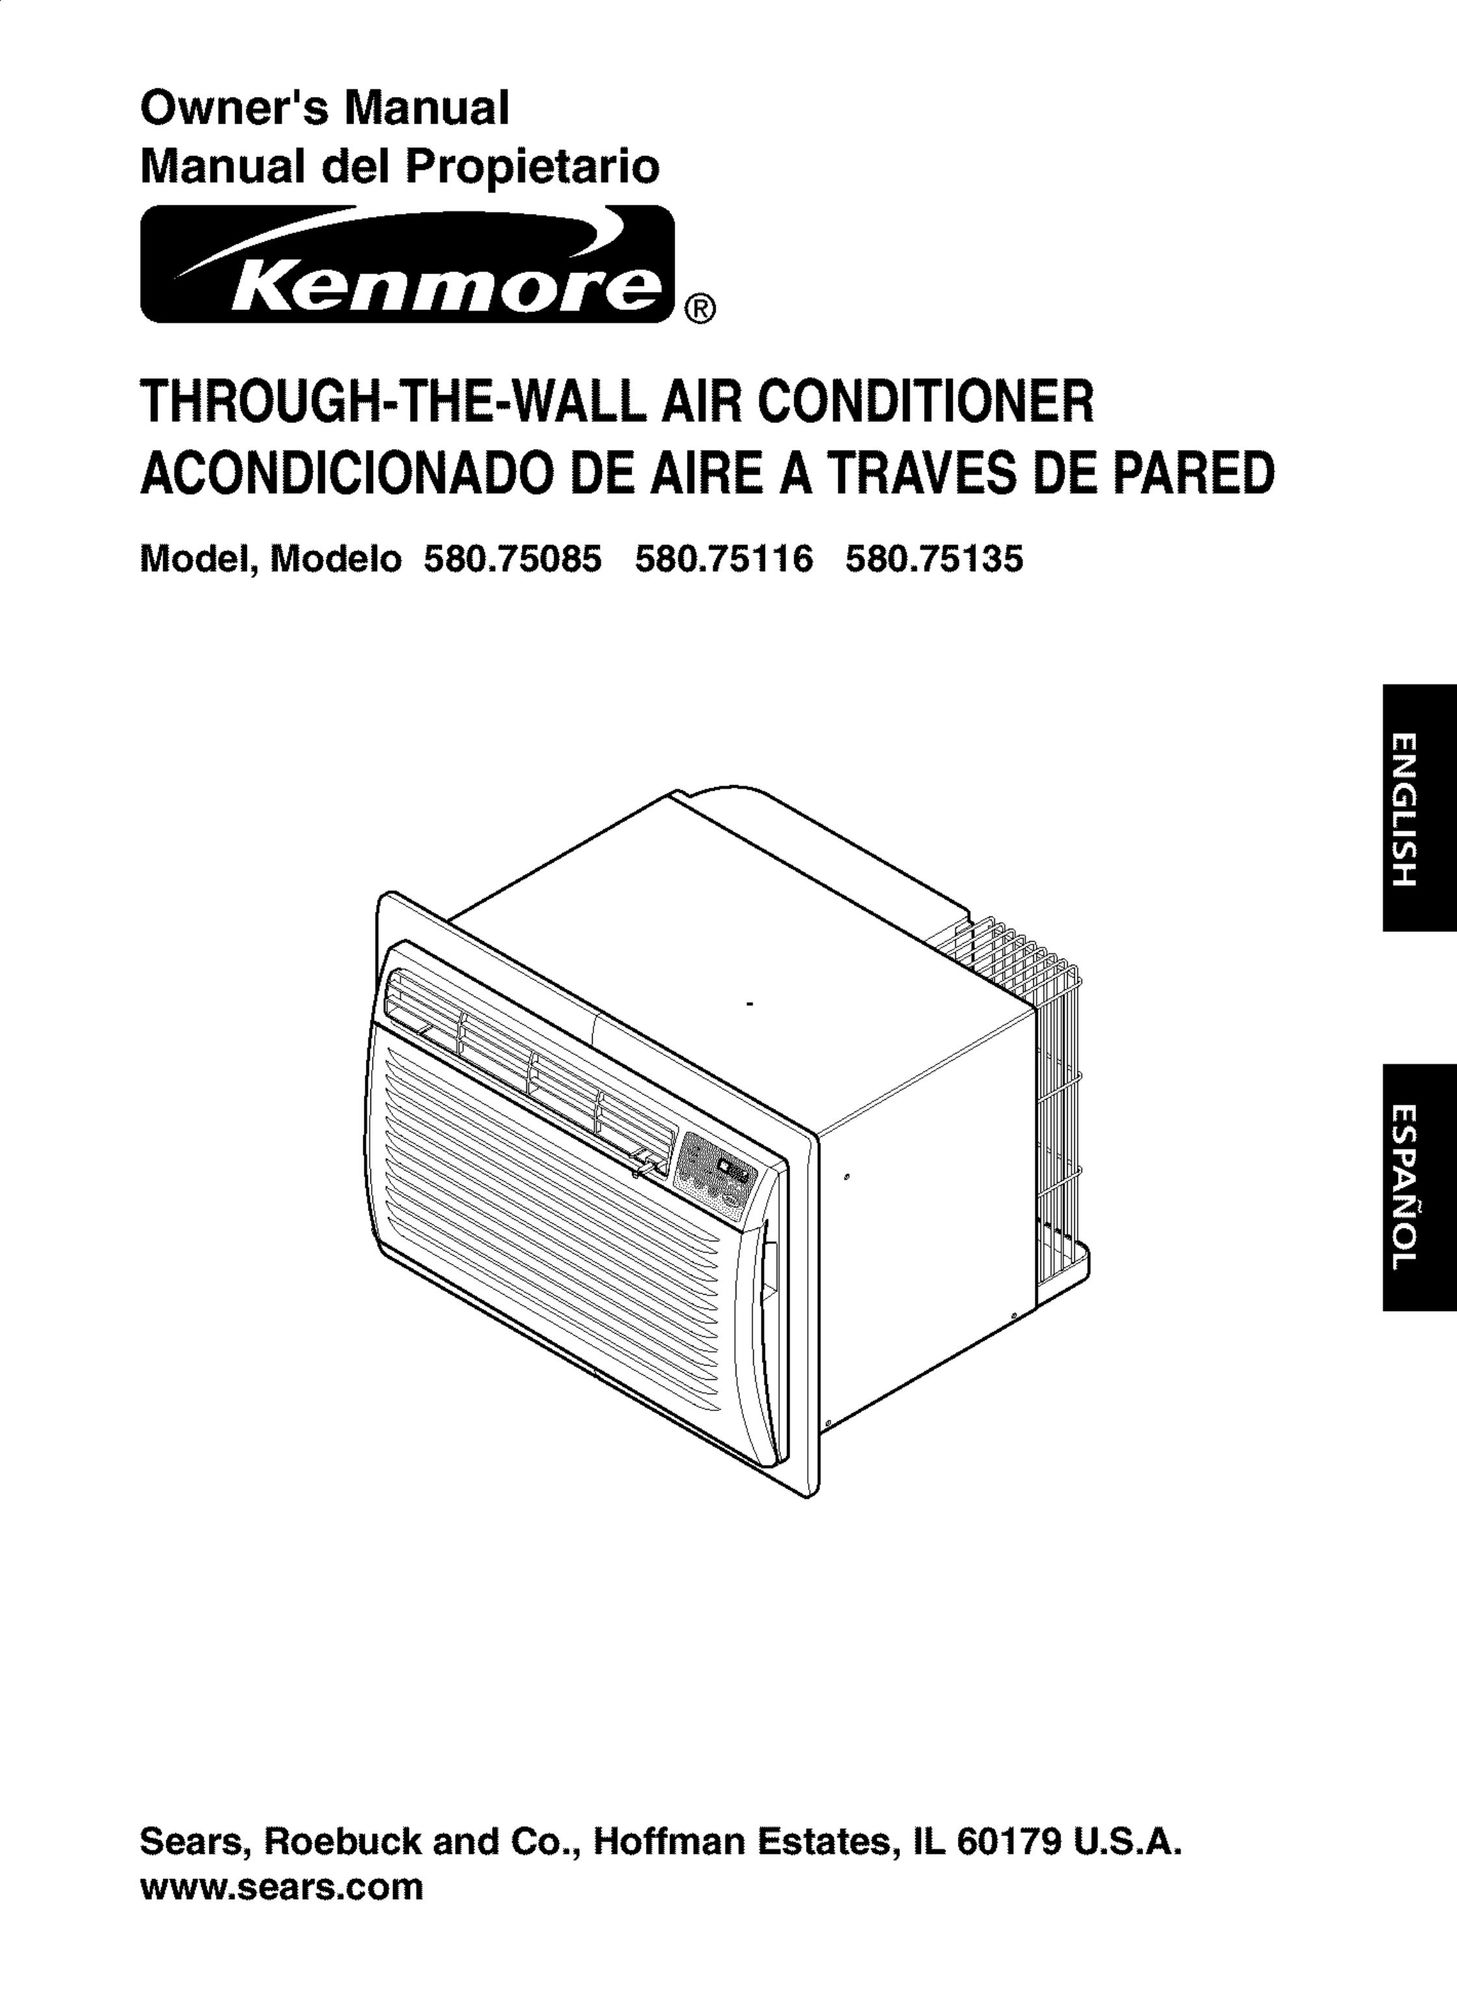 Kenmore 580.75085 Air Conditioner User Manual